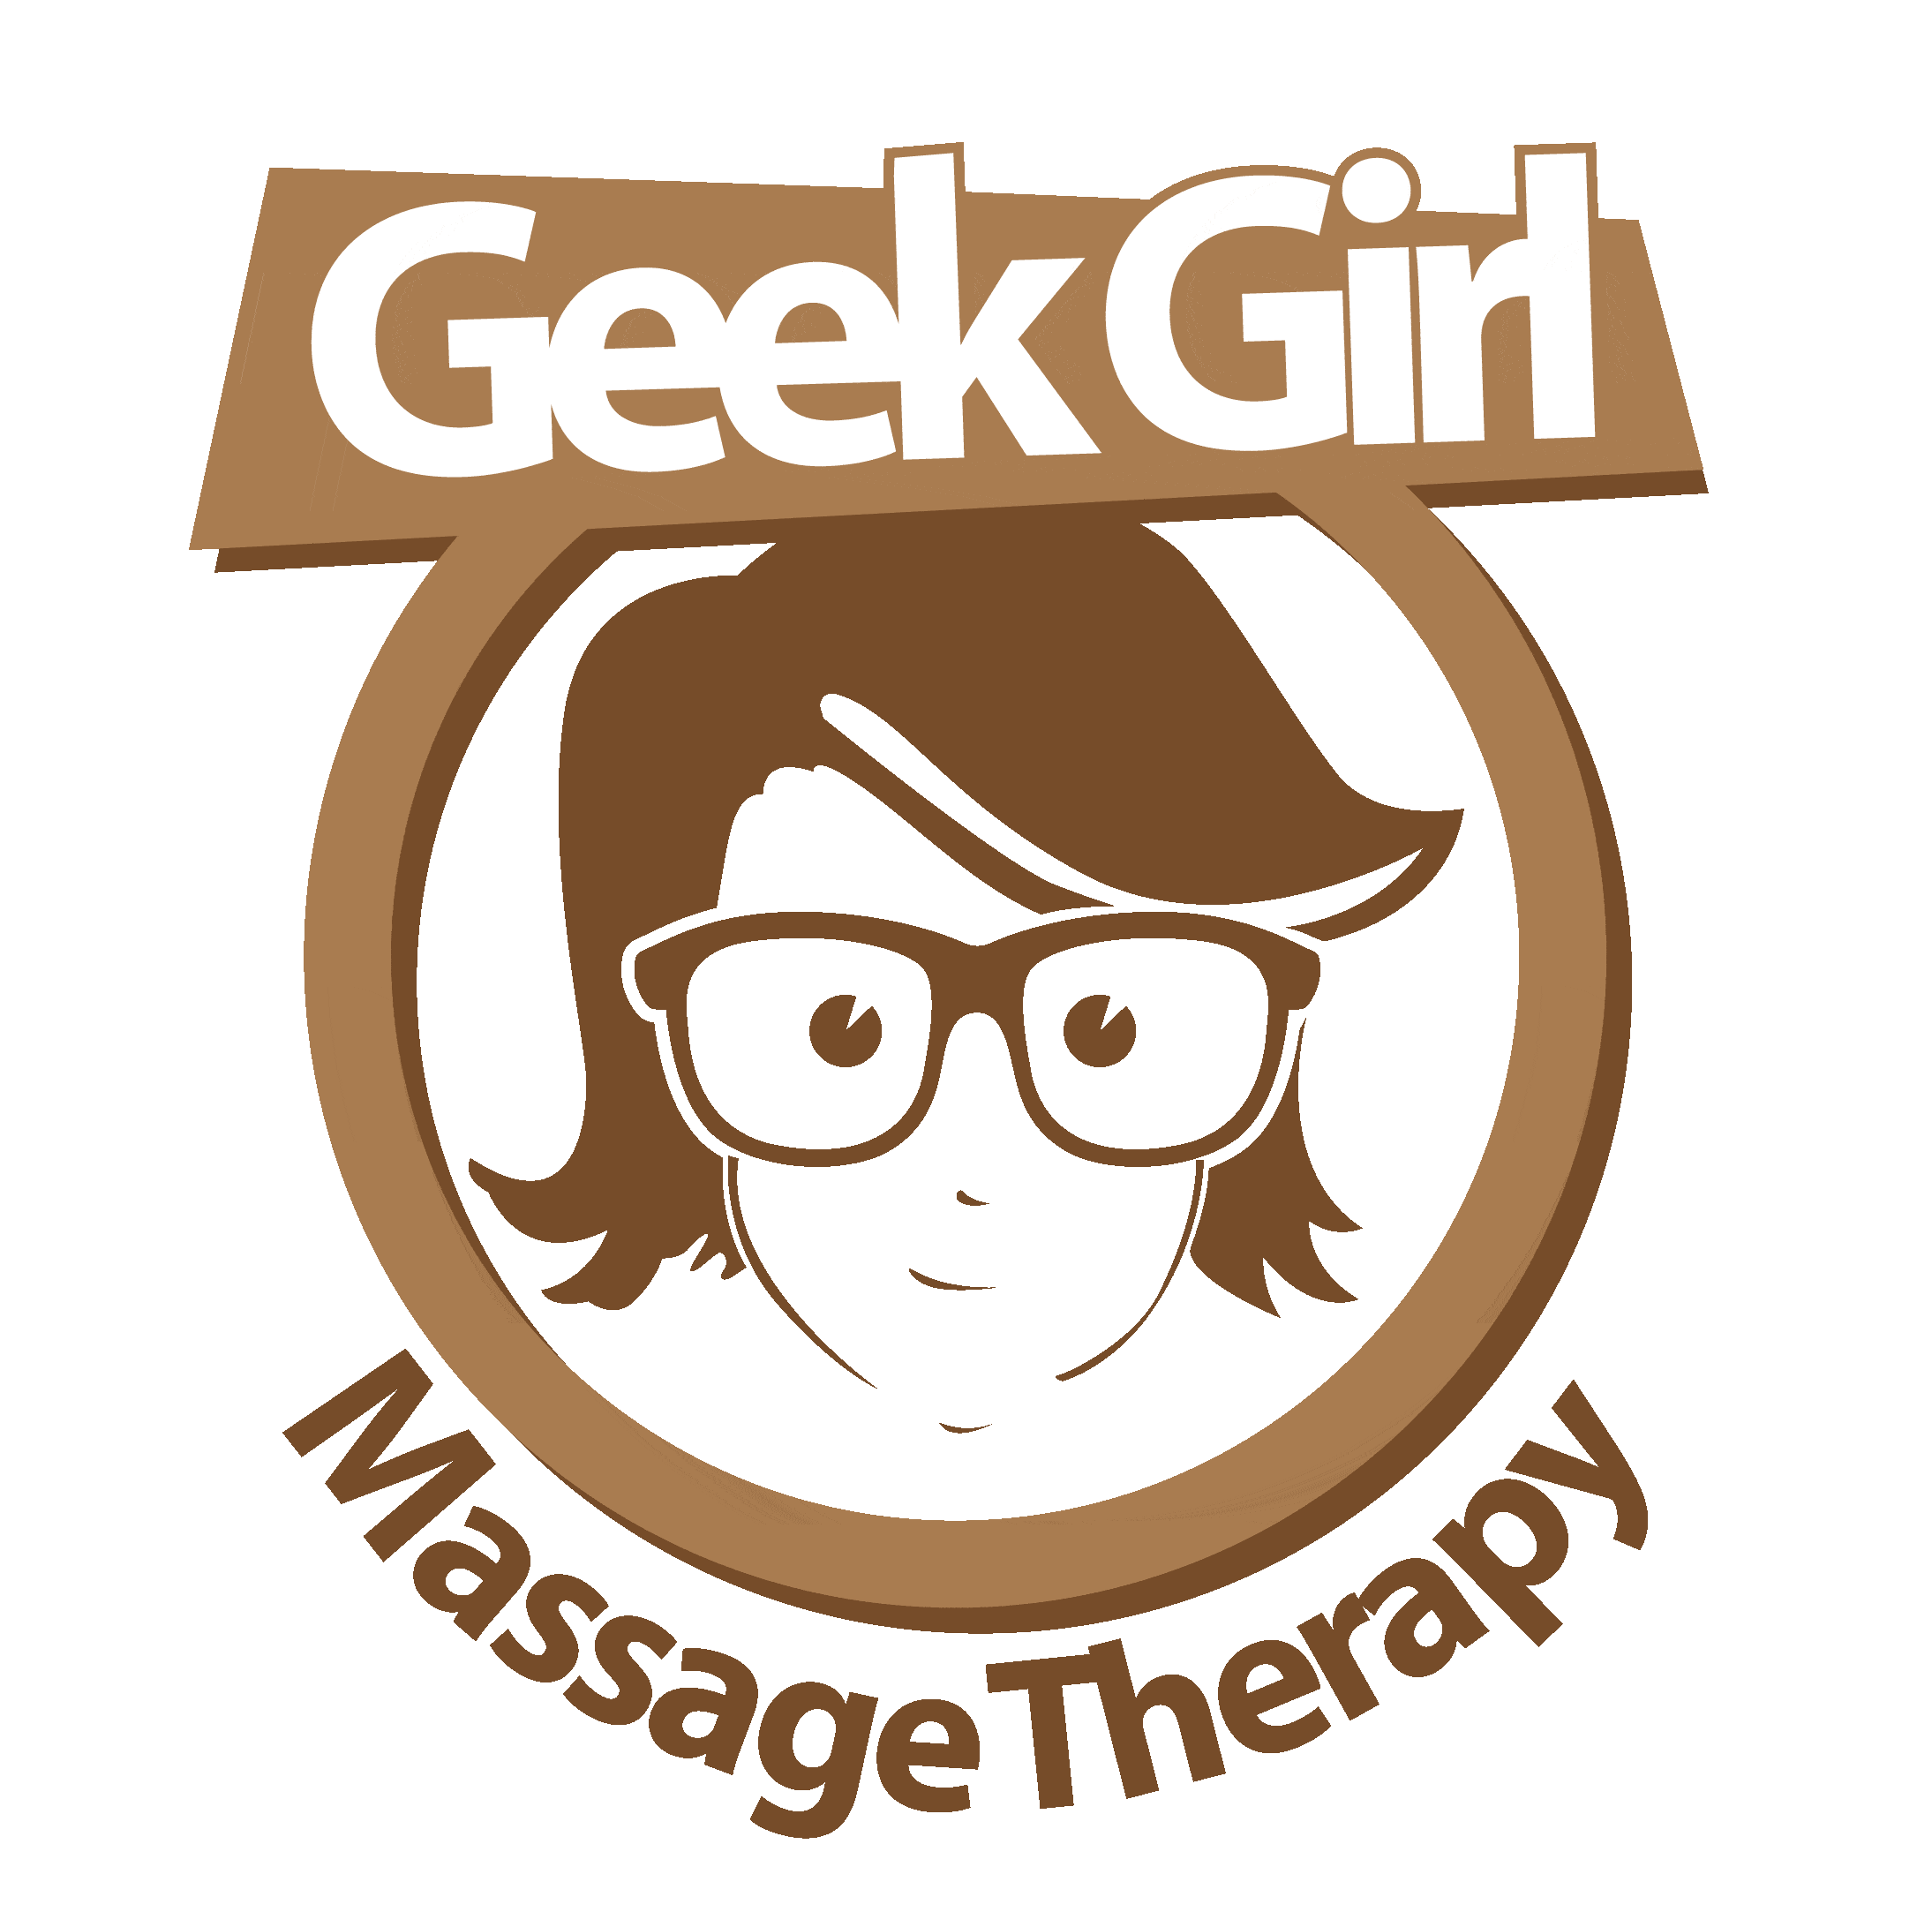 Geek Girl Massage Therapy FULL LOGO